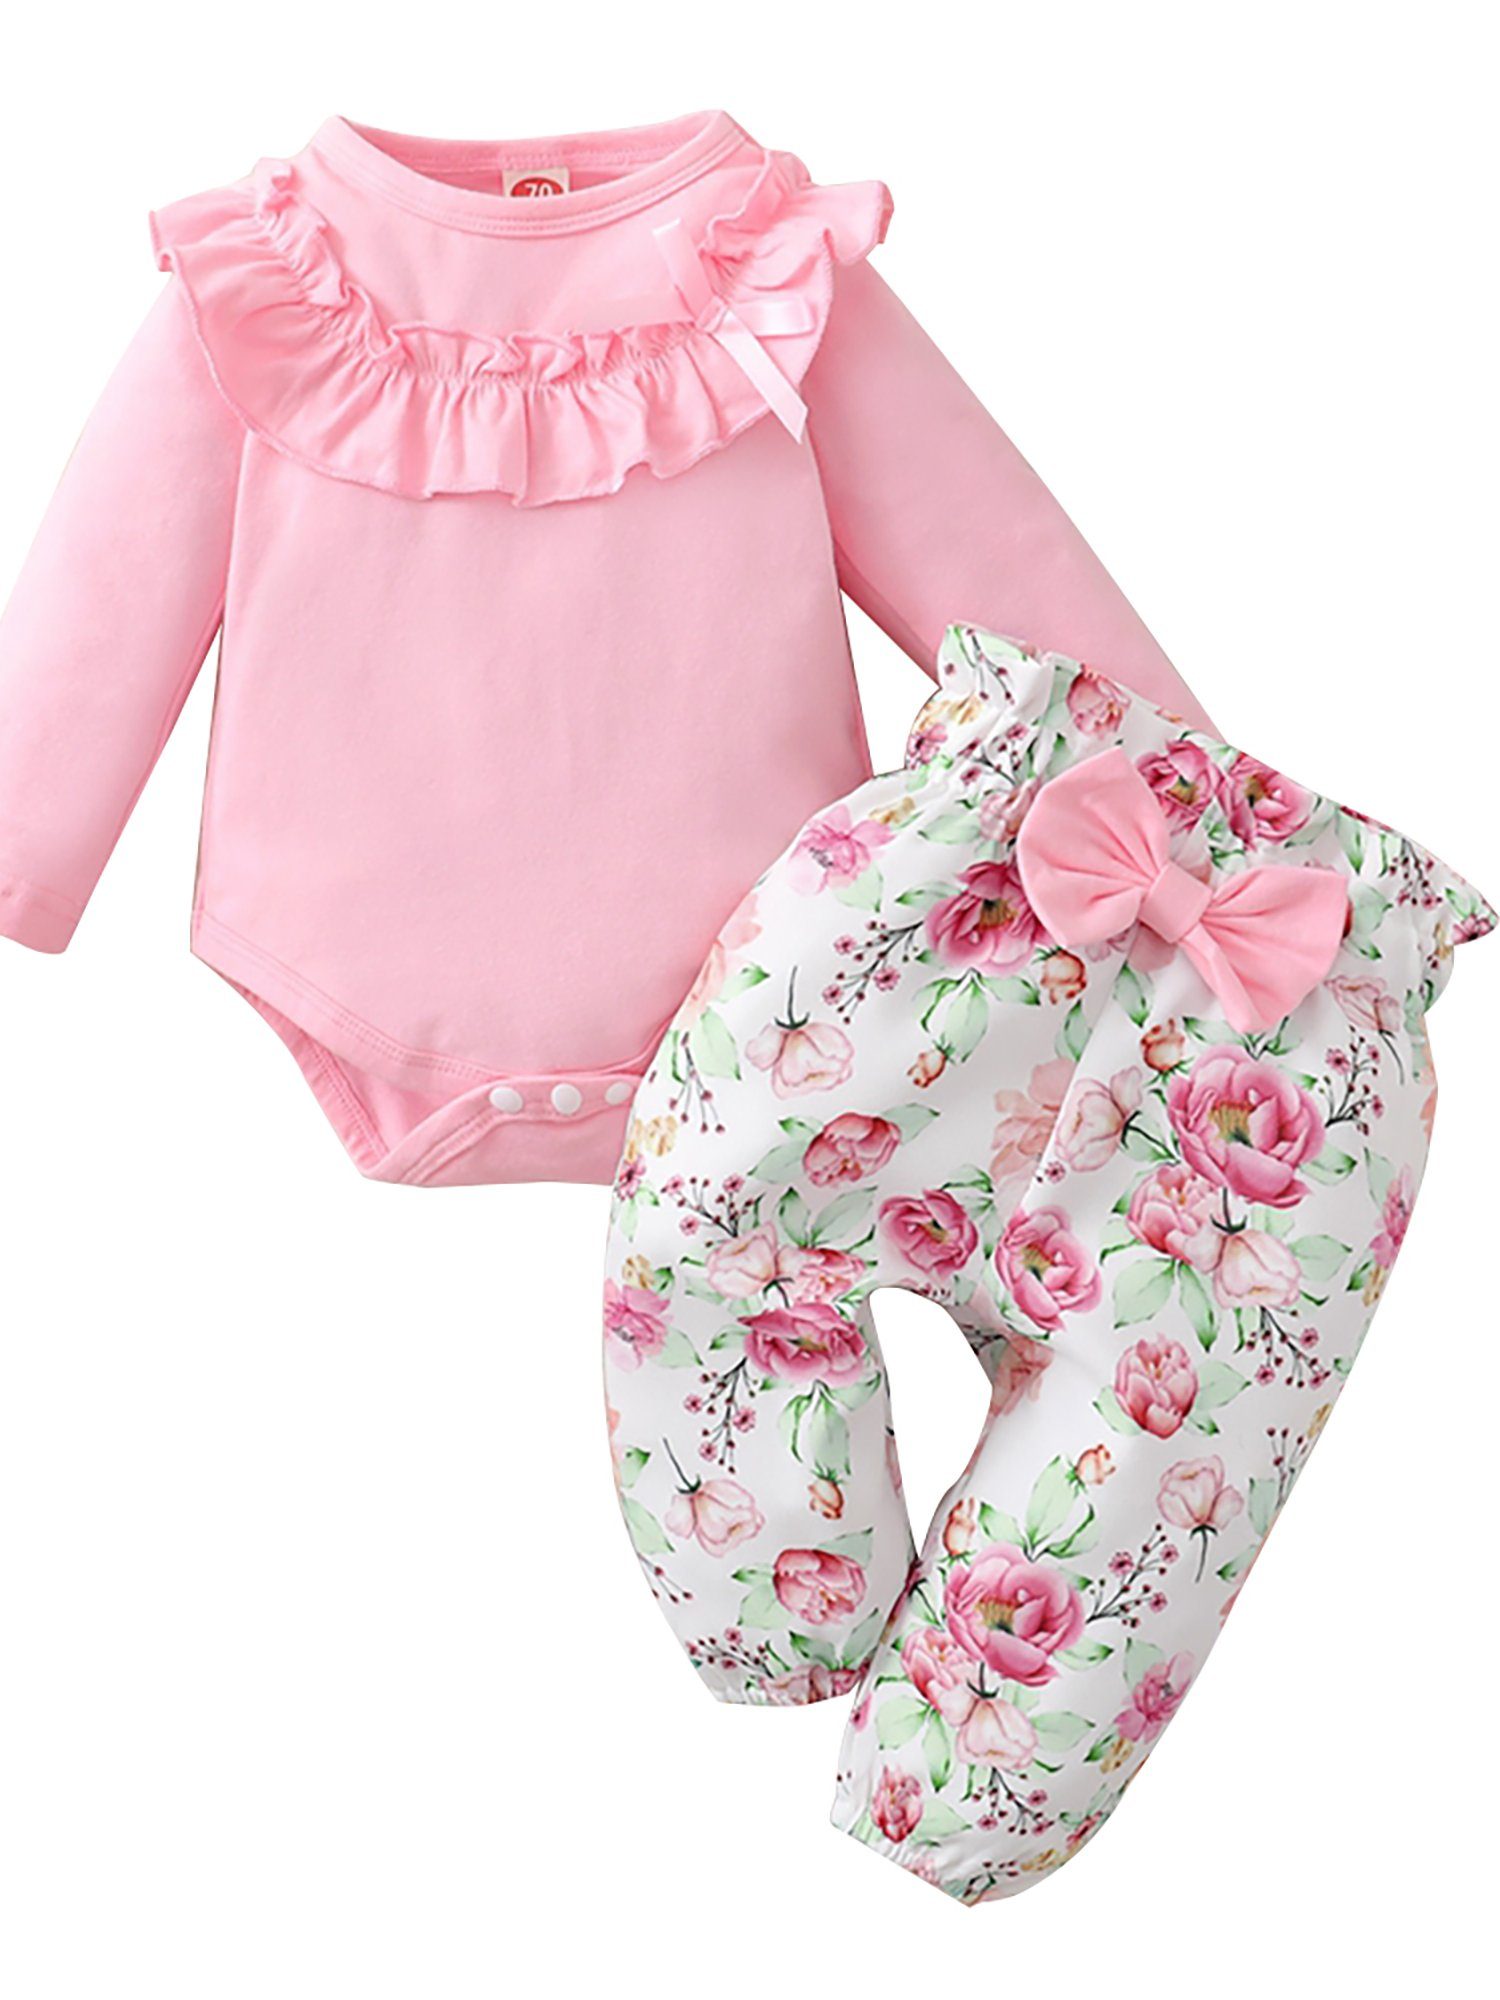 Lapa Neugeborene Mädchen Mädchen Blumen Outfits Strampler Tops Hosen Röcke Set 